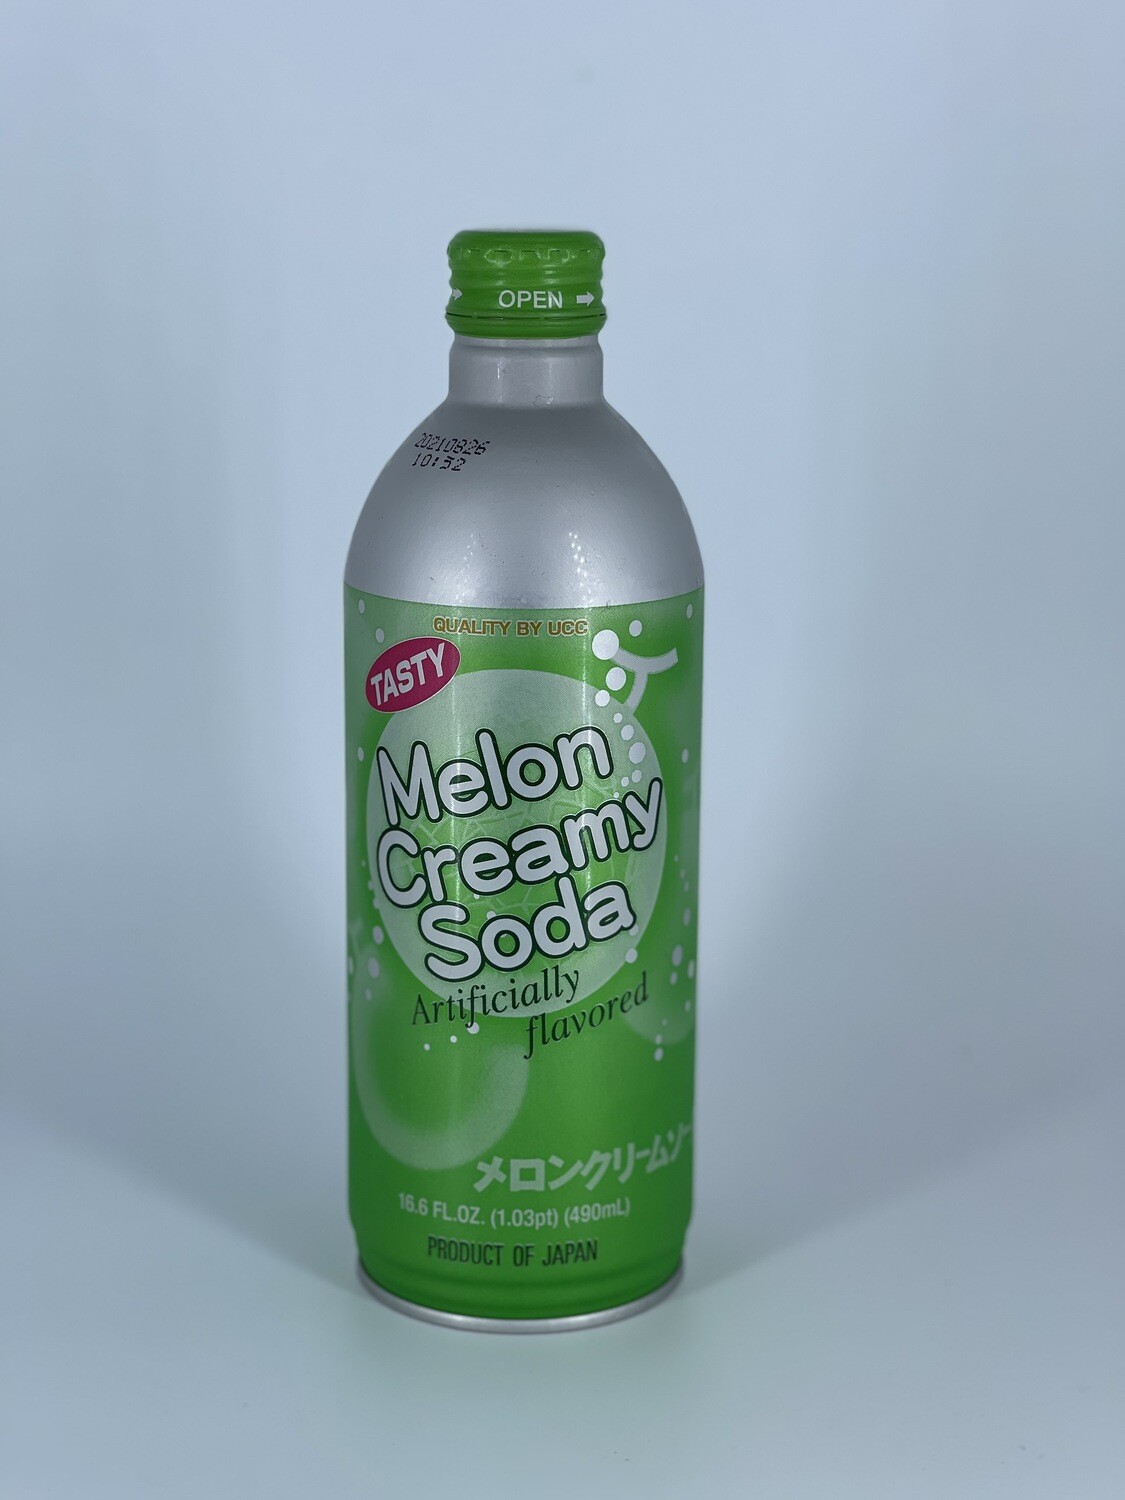 Tasty Melon Cream